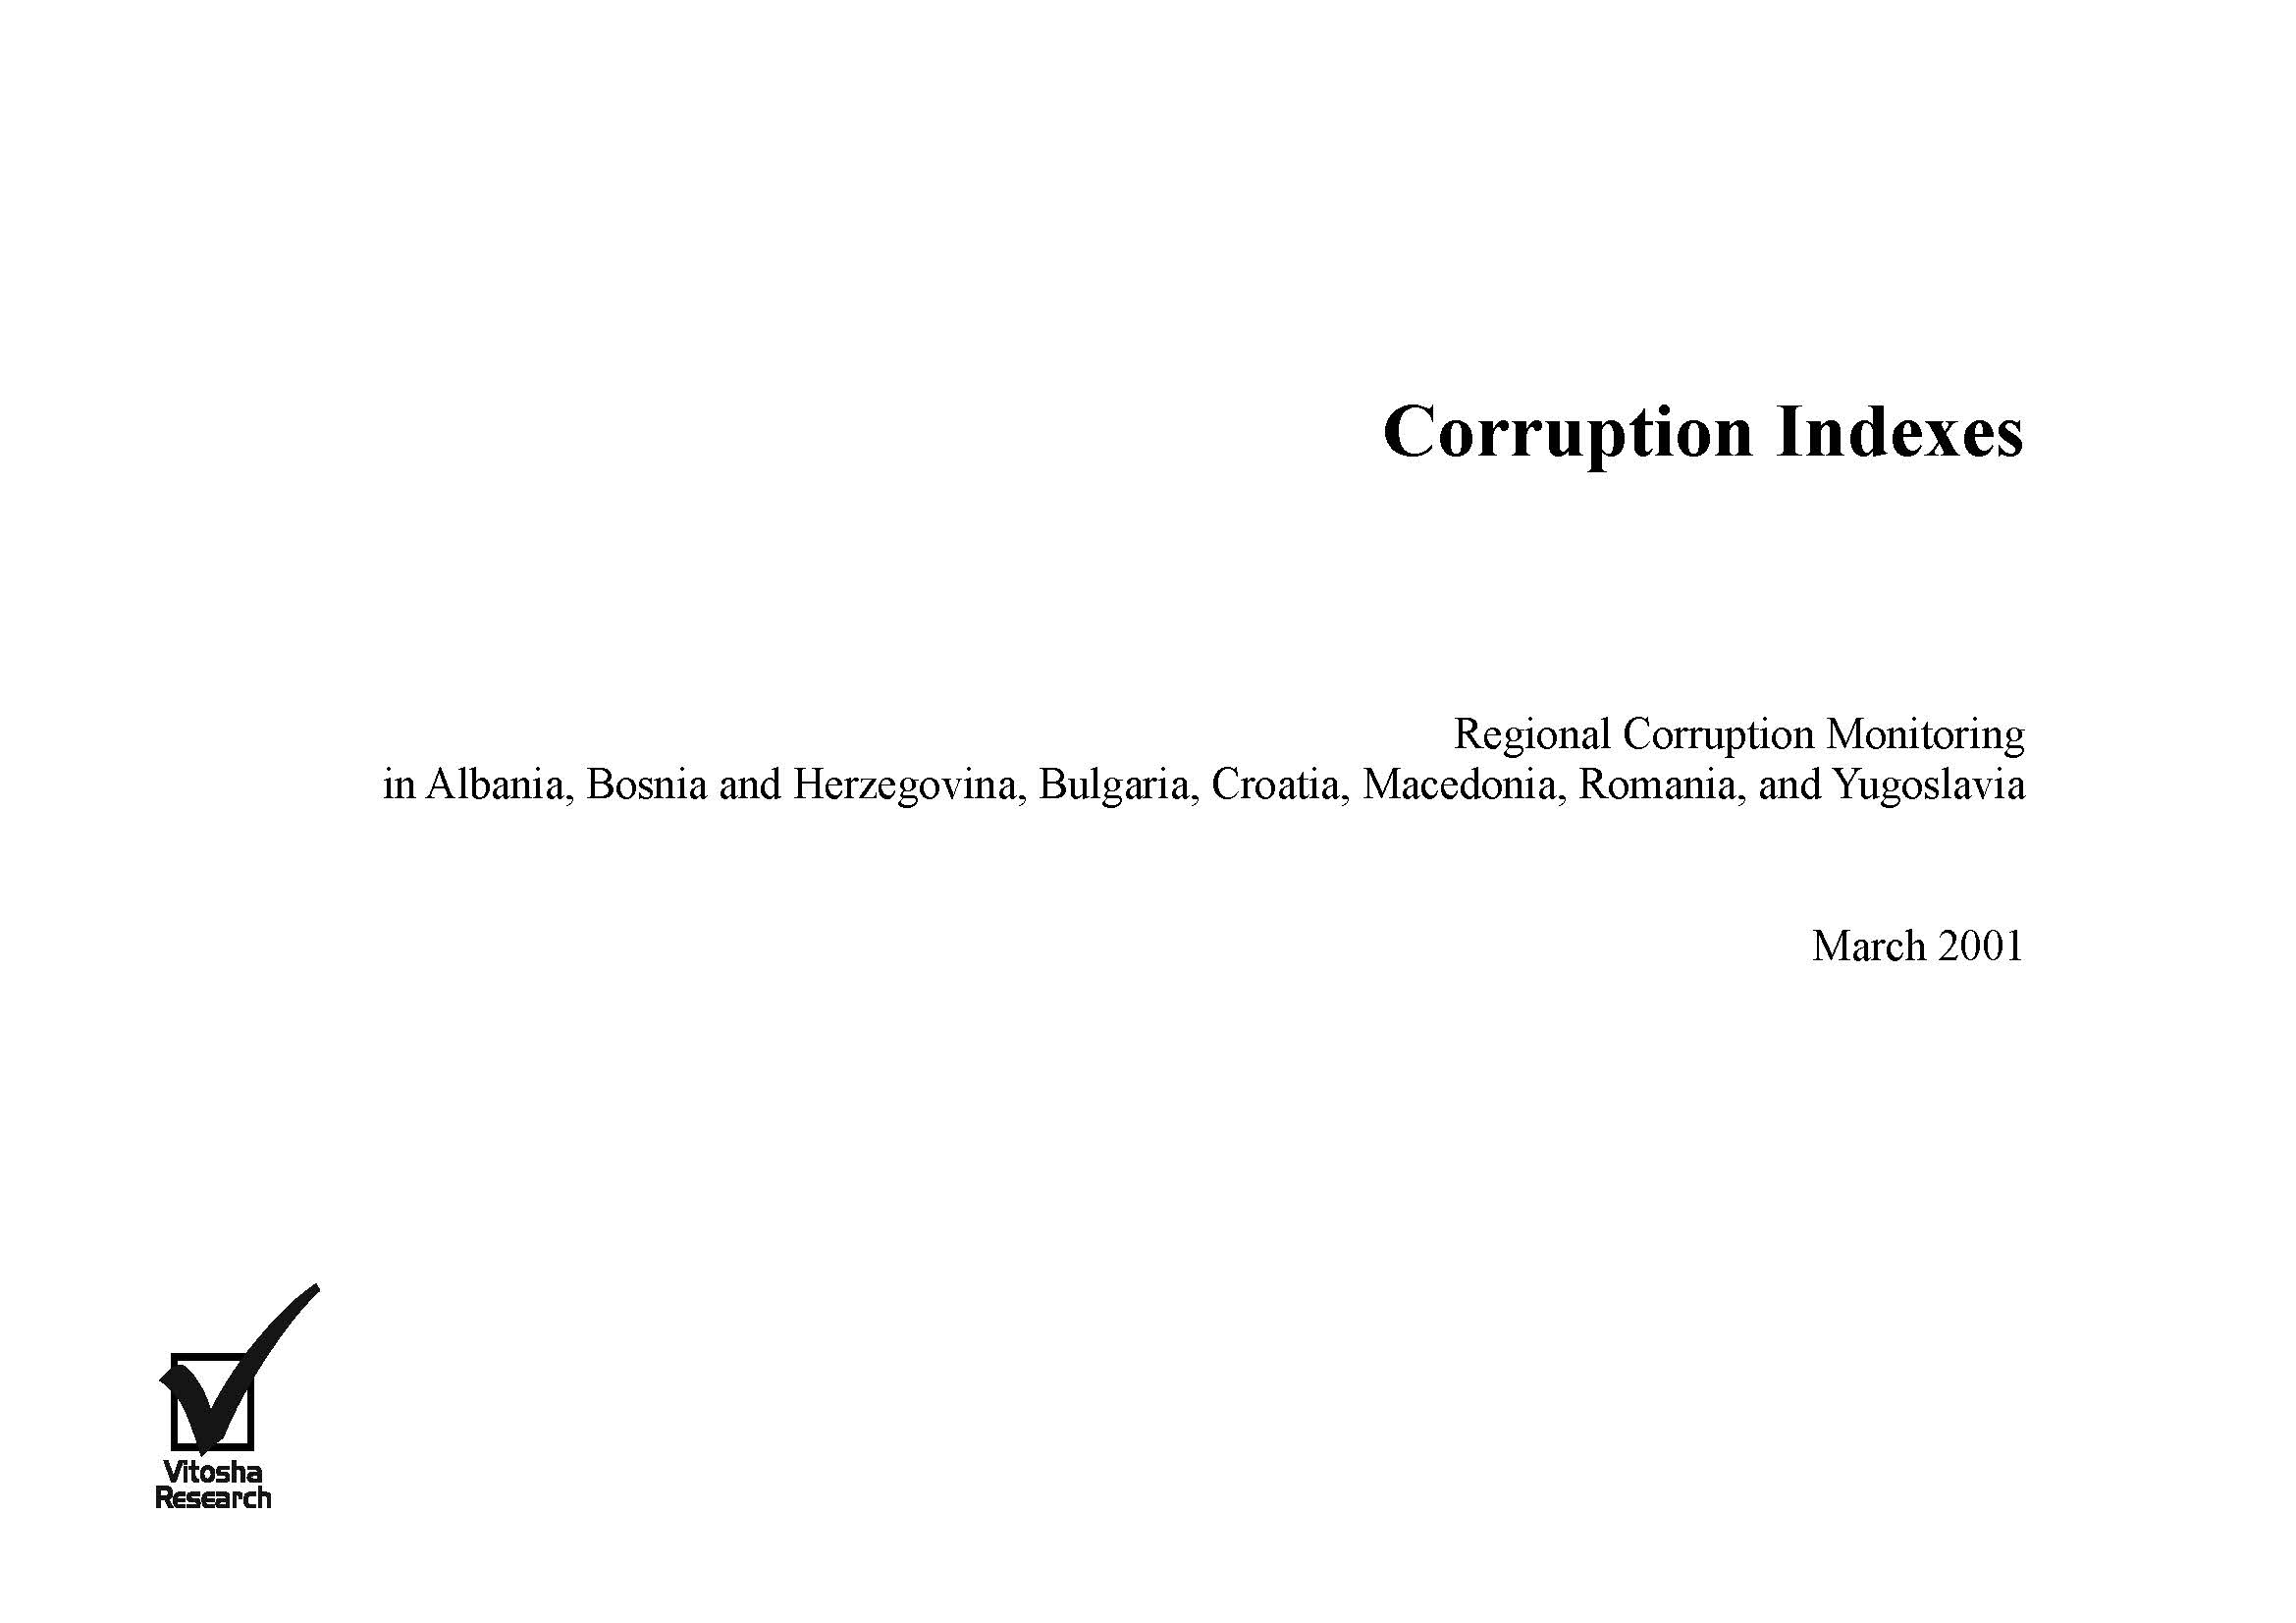 Corruption Indexes, Regional Corruption Monitoring in Albania, Bosnia and Herzegovina, Bulgaria, Croatia, Macedonia, Romania, and Yugoslavia, March 2001